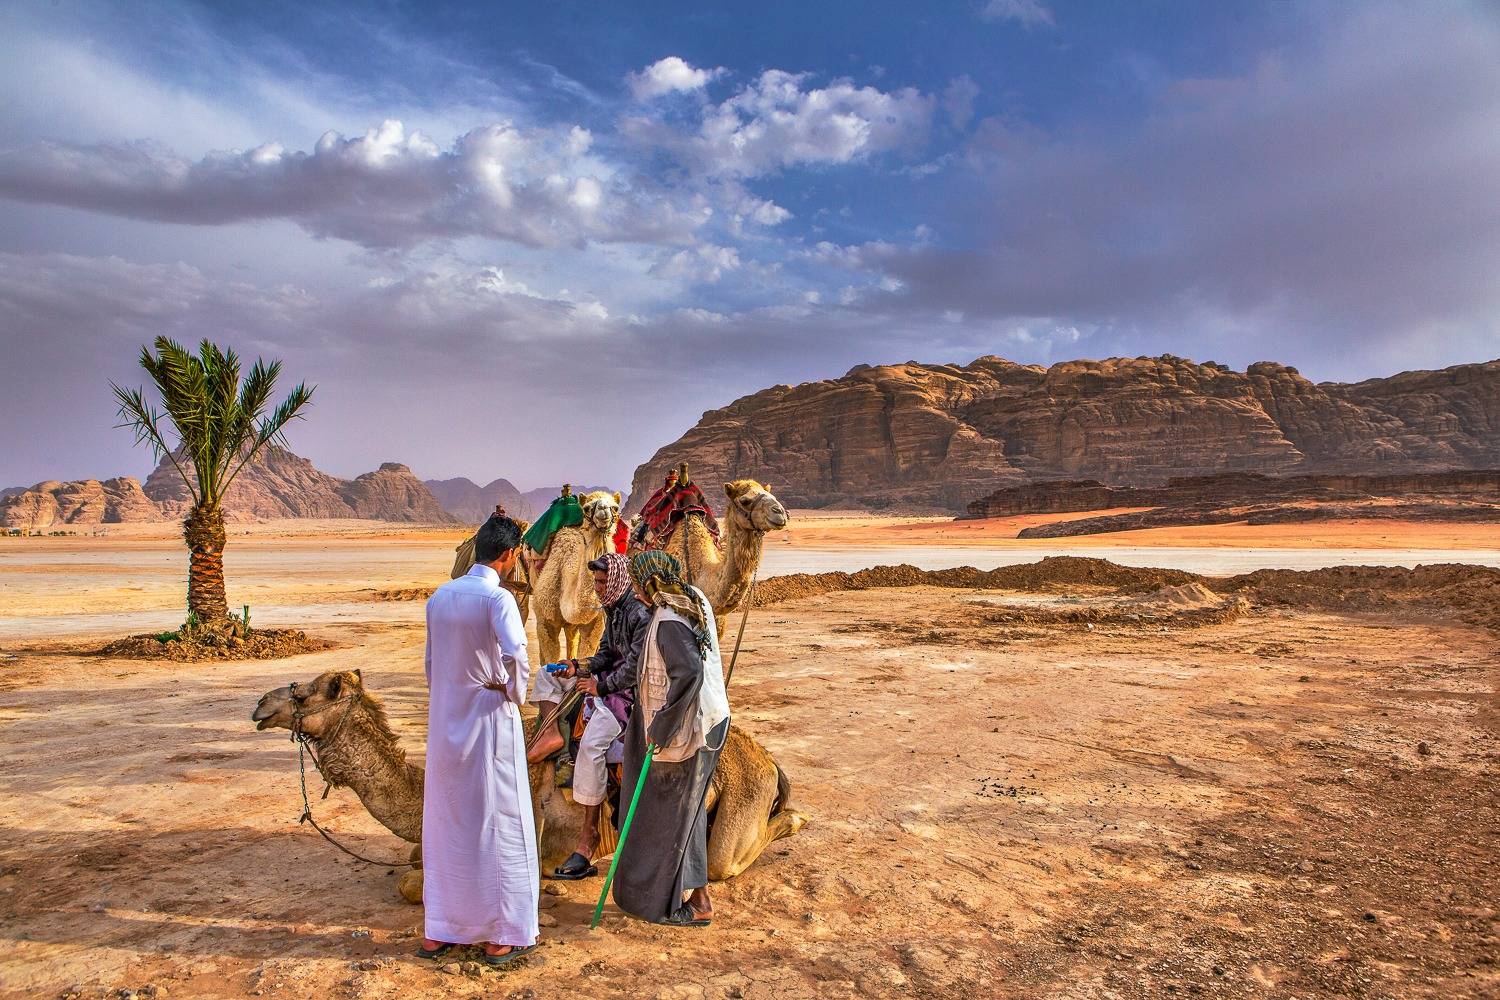 Preparing the camels